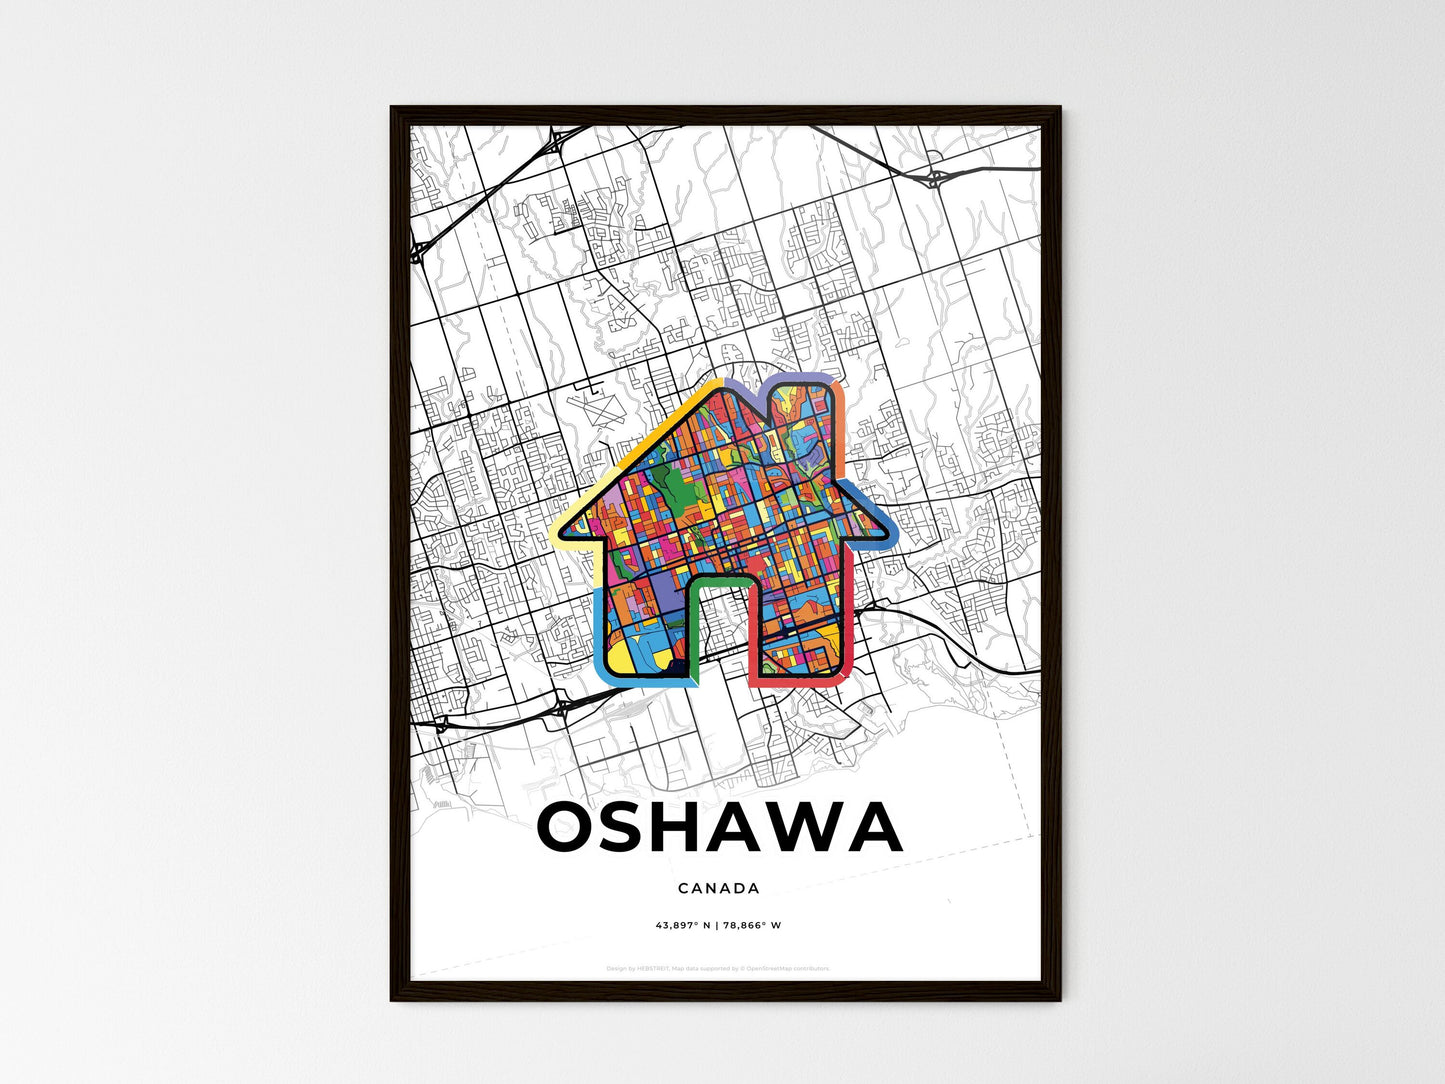 OSHAWA CANADA minimal art map with a colorful icon. Style 3